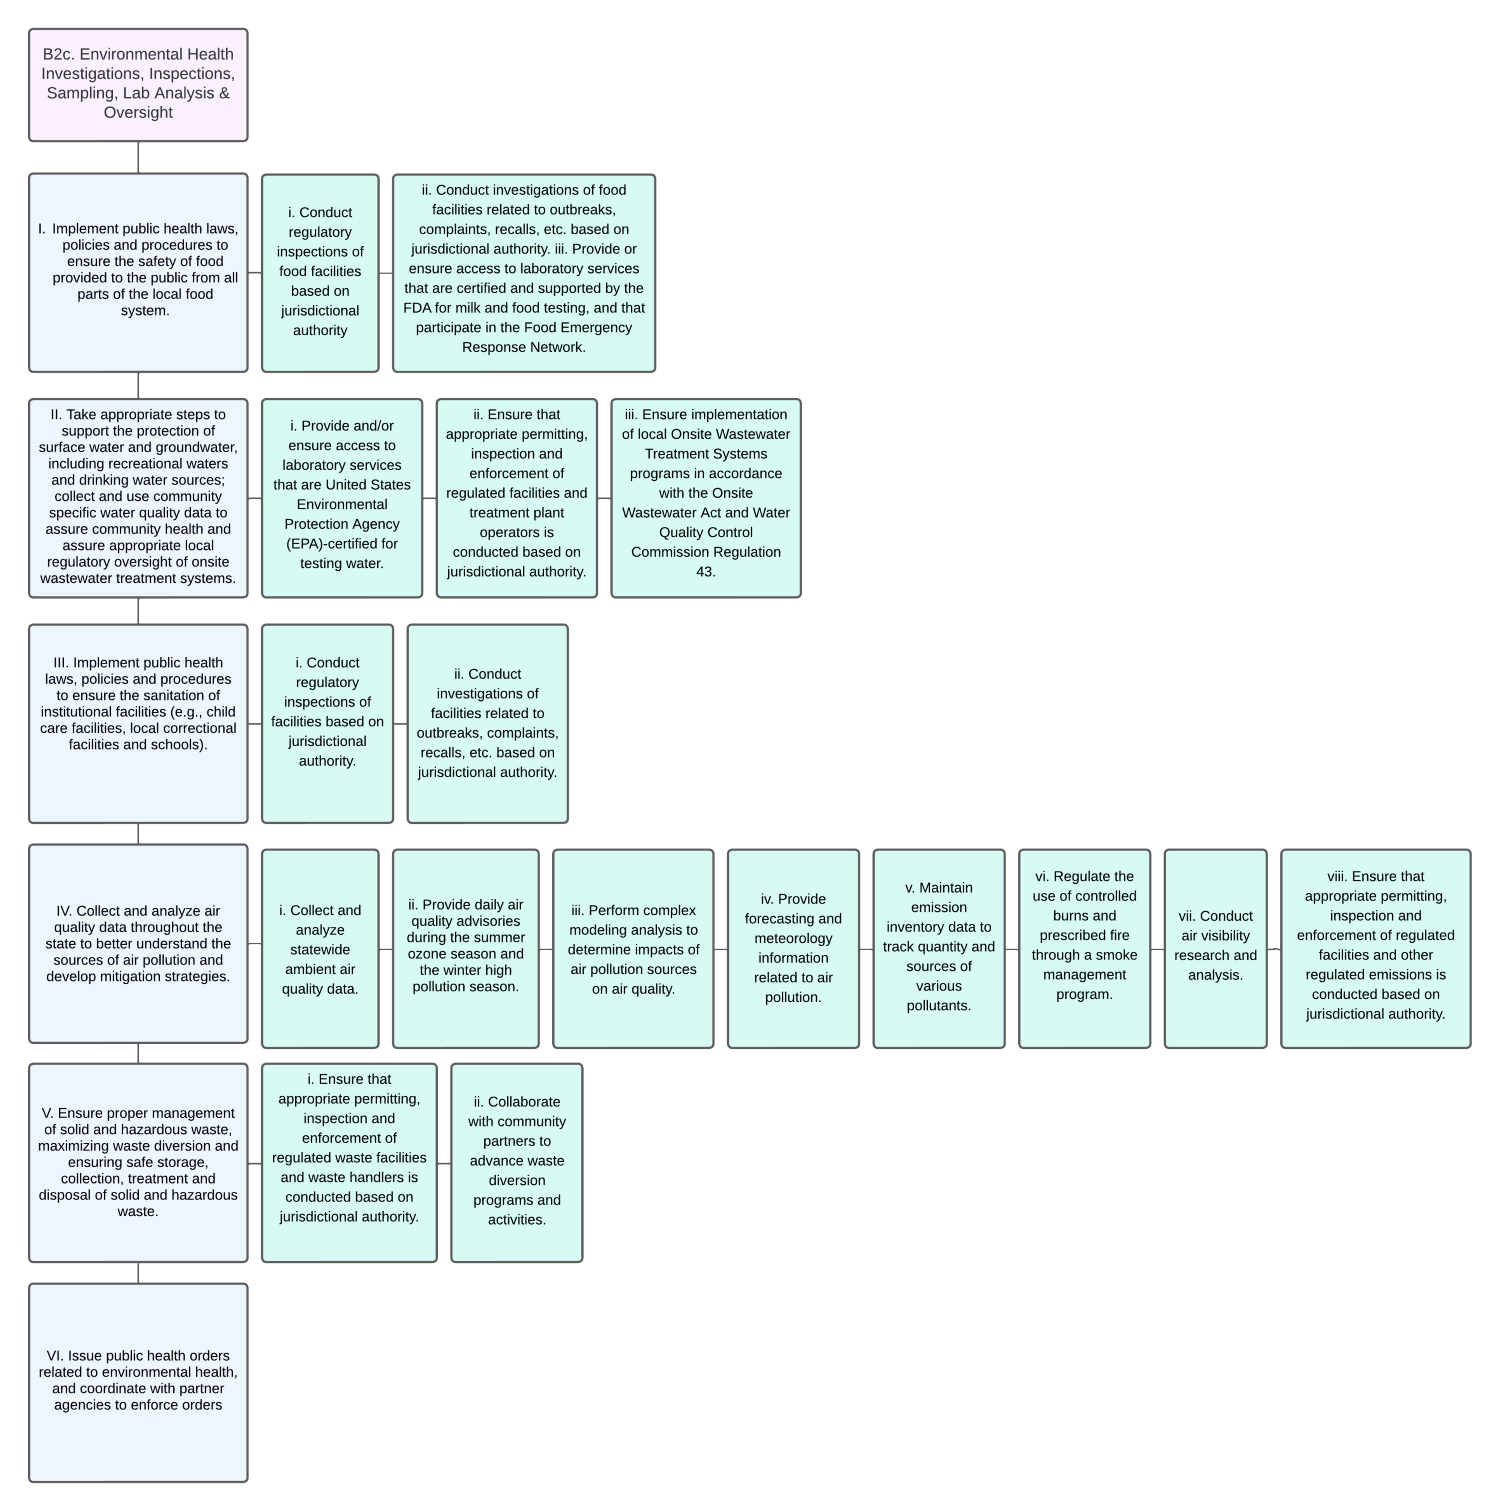 Organizational Chart of Environmental Health Investigations, Inspections, Sampling, Lab Analysis & Oversight